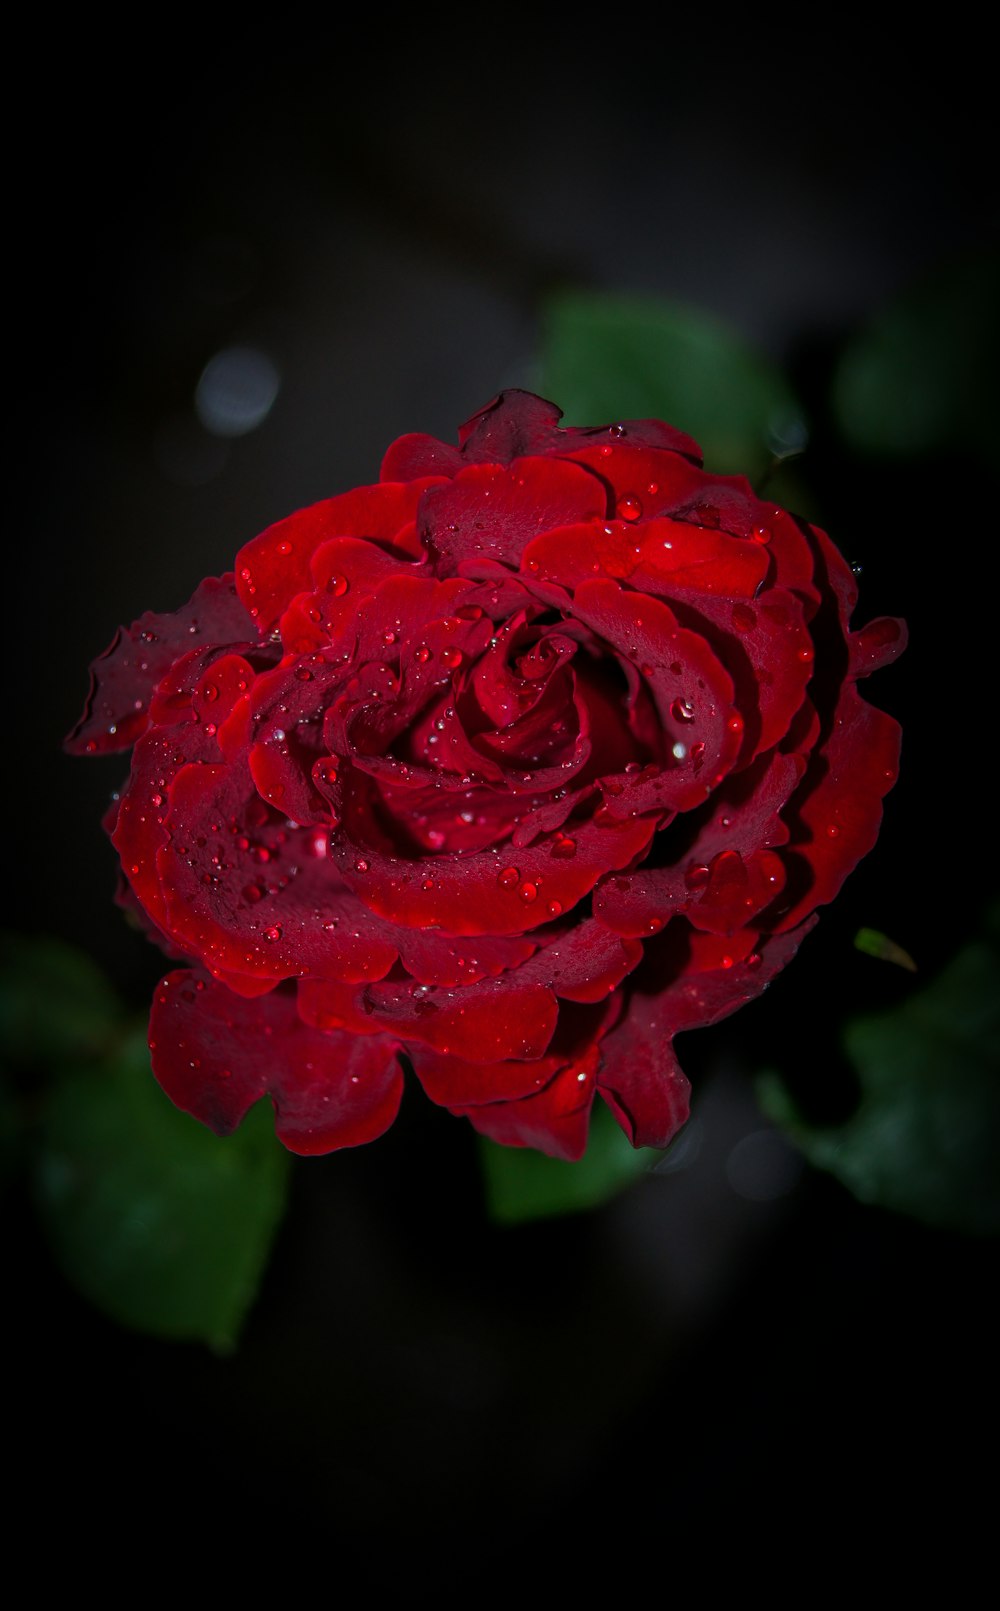 Rose In Dark Pictures | Download Free Images on Unsplash